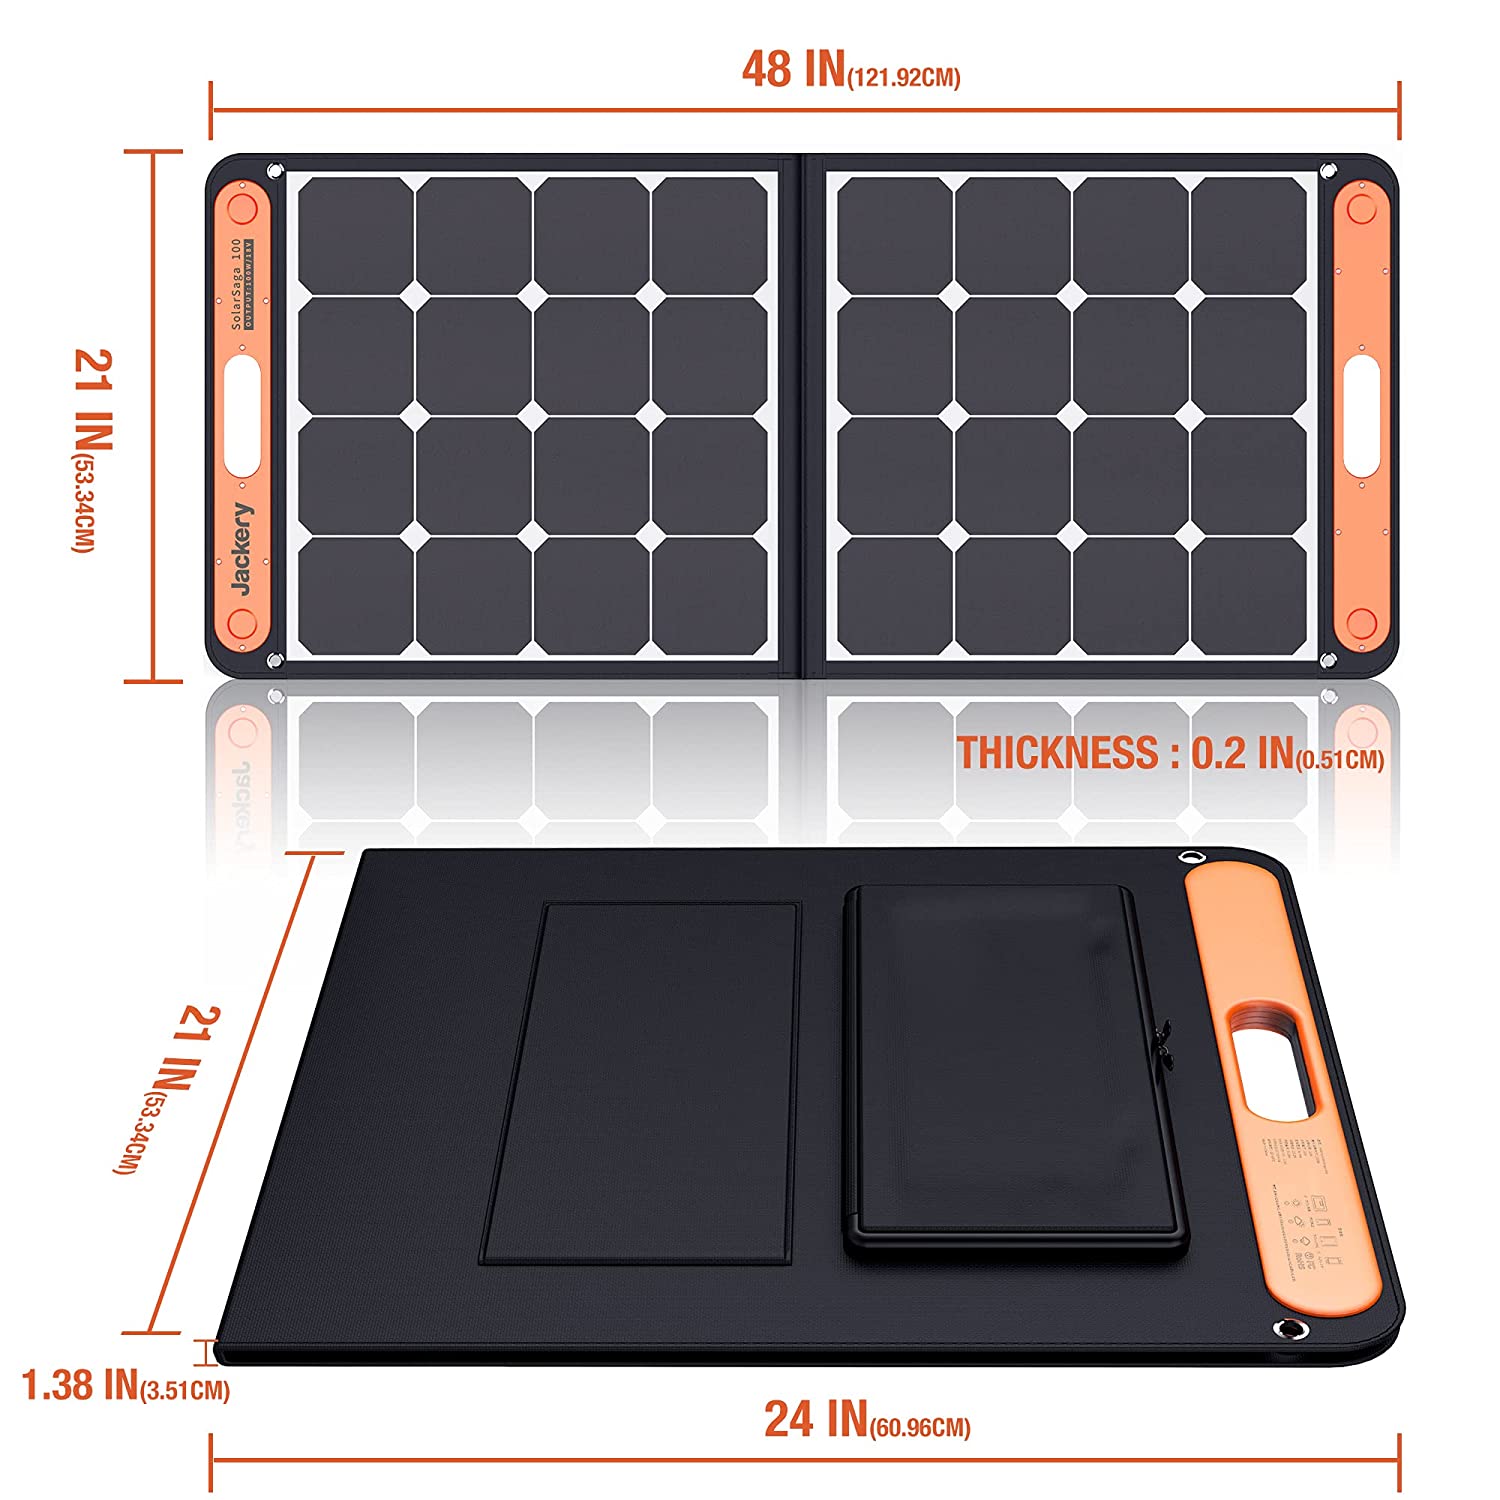 Jackery Explorer 500 500W Portable Powerstation mit SolarSaga 100W Solar Panel